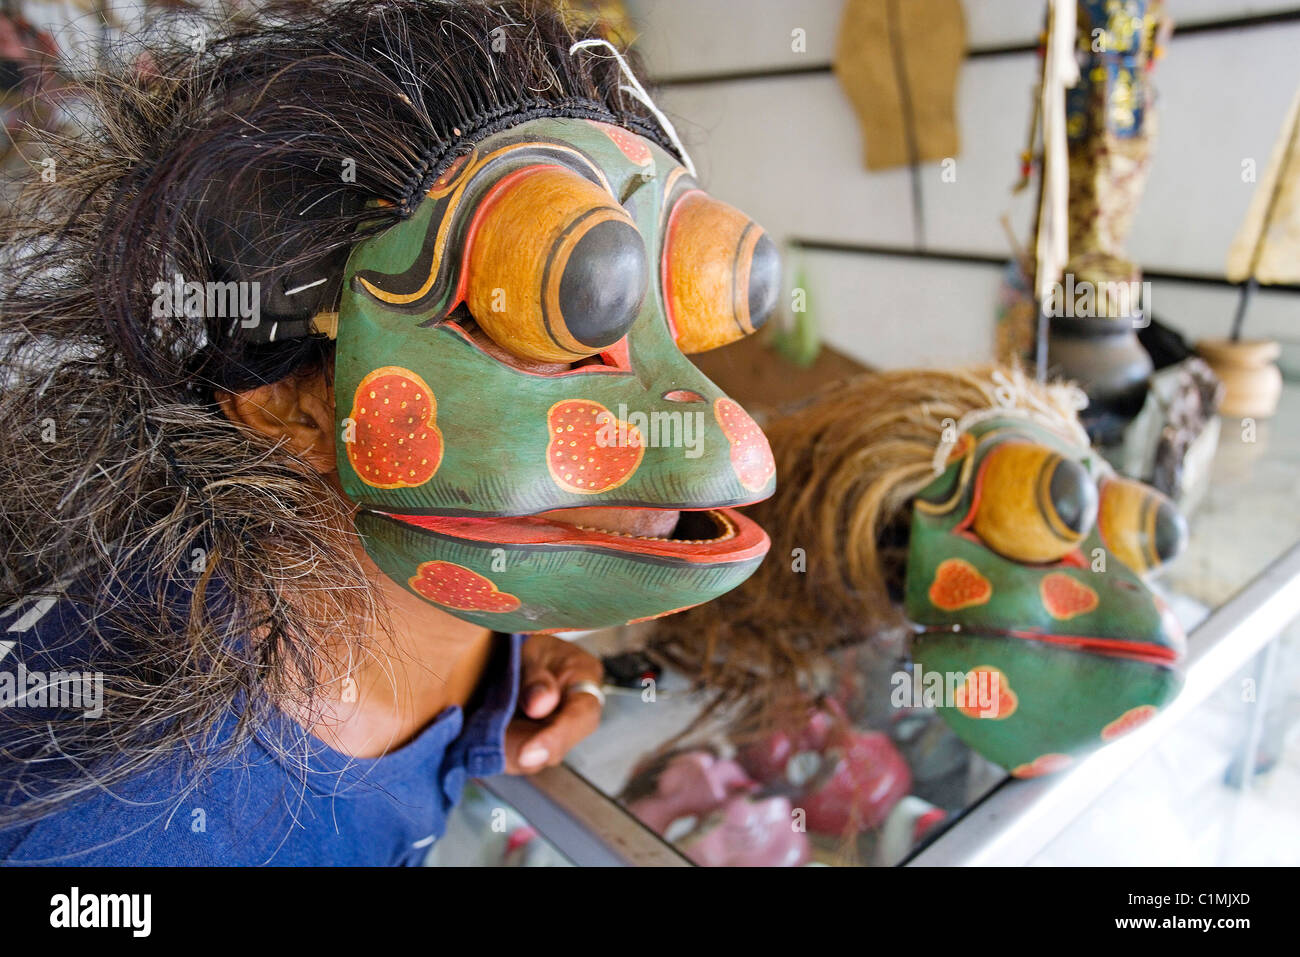 Indonesia, Bali, wayang oreng puppets maker Stock Photo